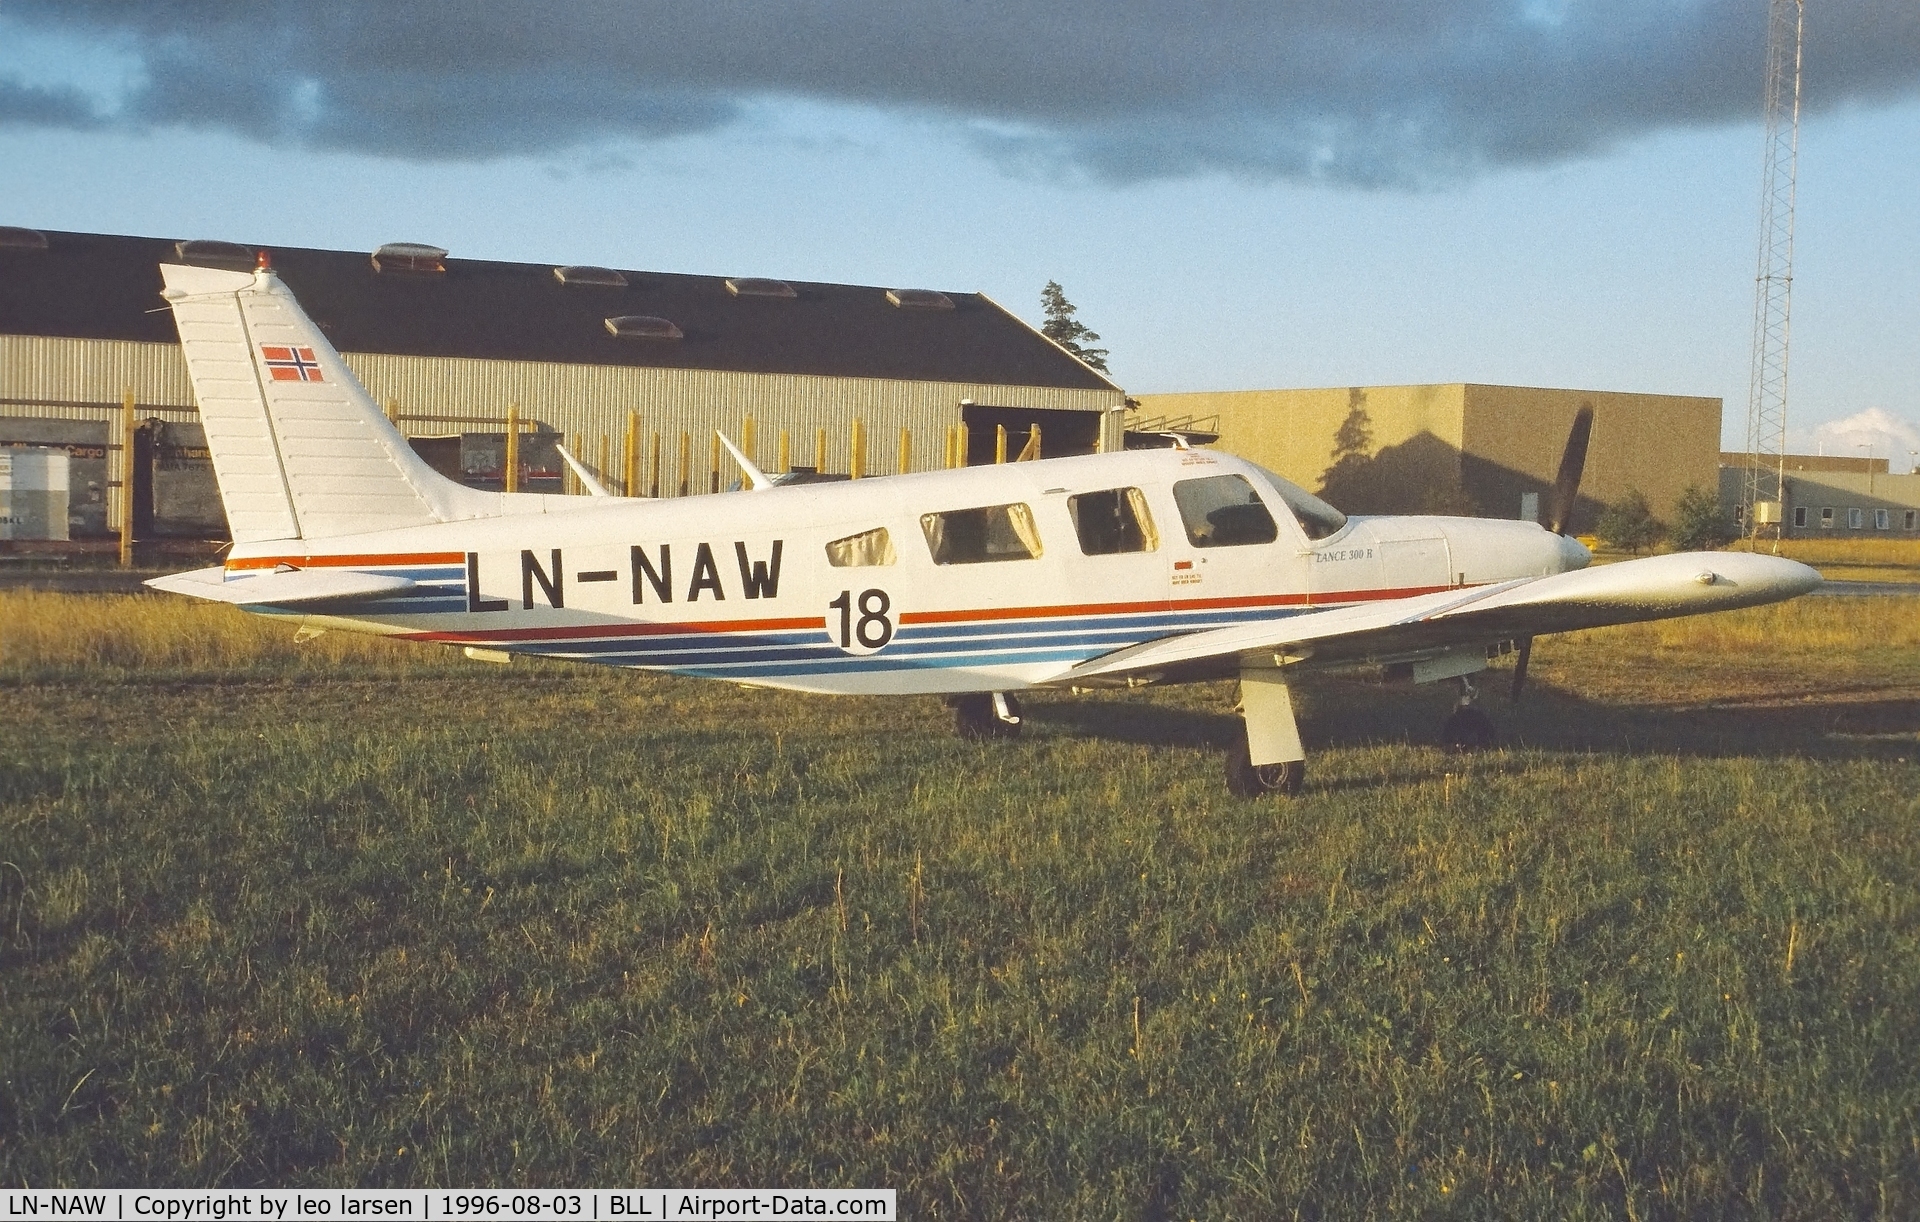 LN-NAW, 1977 Piper PA-32R Lance 3000 C/N 32R-7780281, Billund 3.8.1996.Crashed Bjorli Airport Oppland Norway.25.7.1997